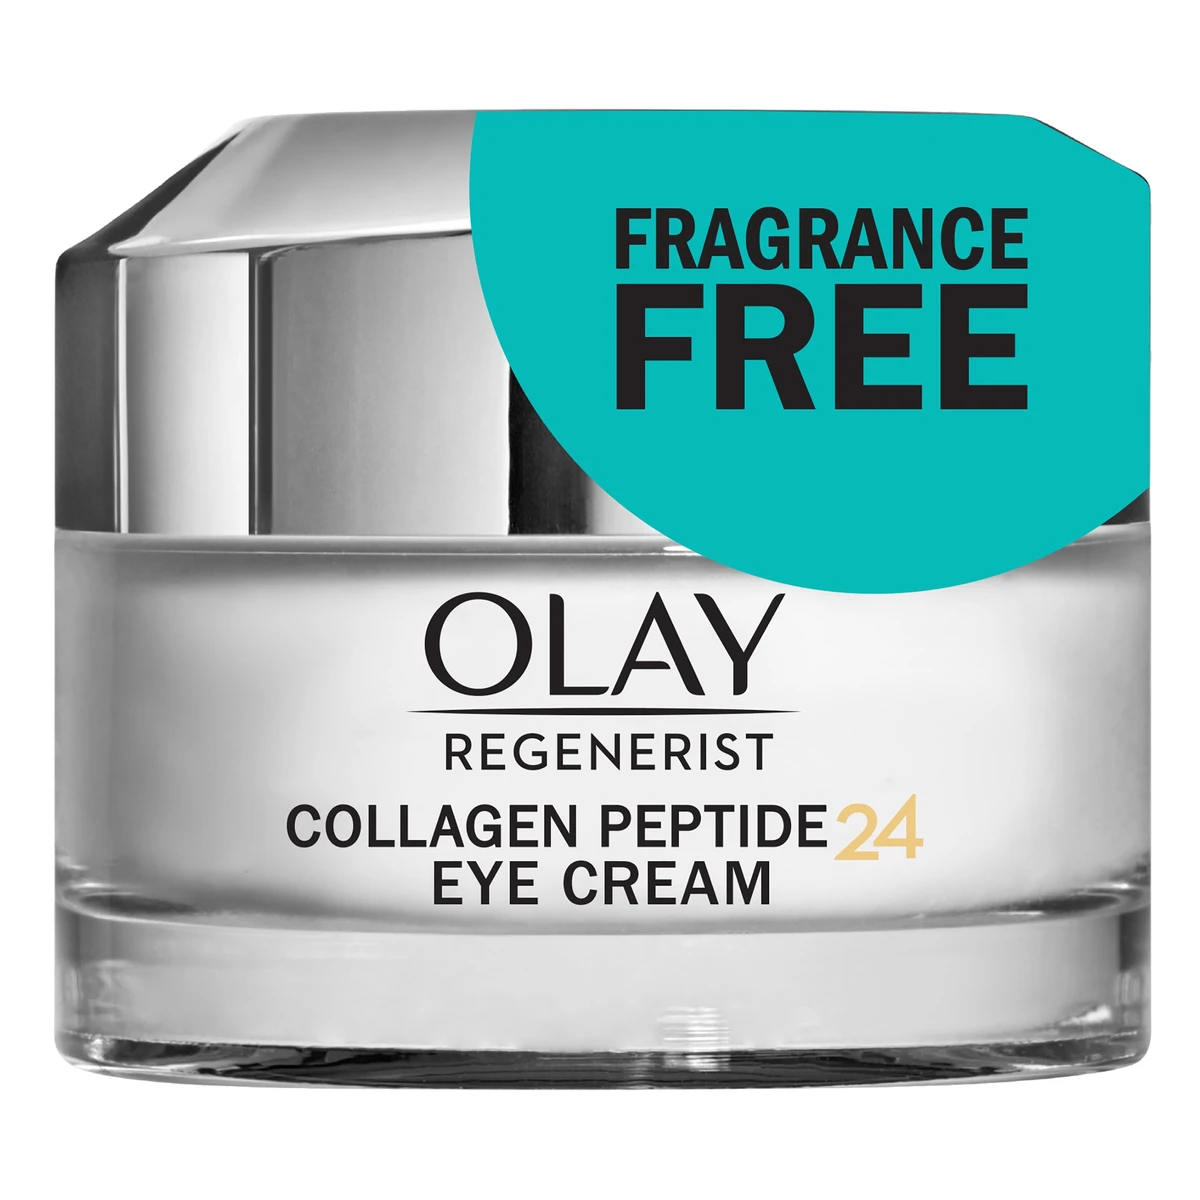 Olay Regenerist Collagen Peptide 24 Eye Cream, Fragrance Free